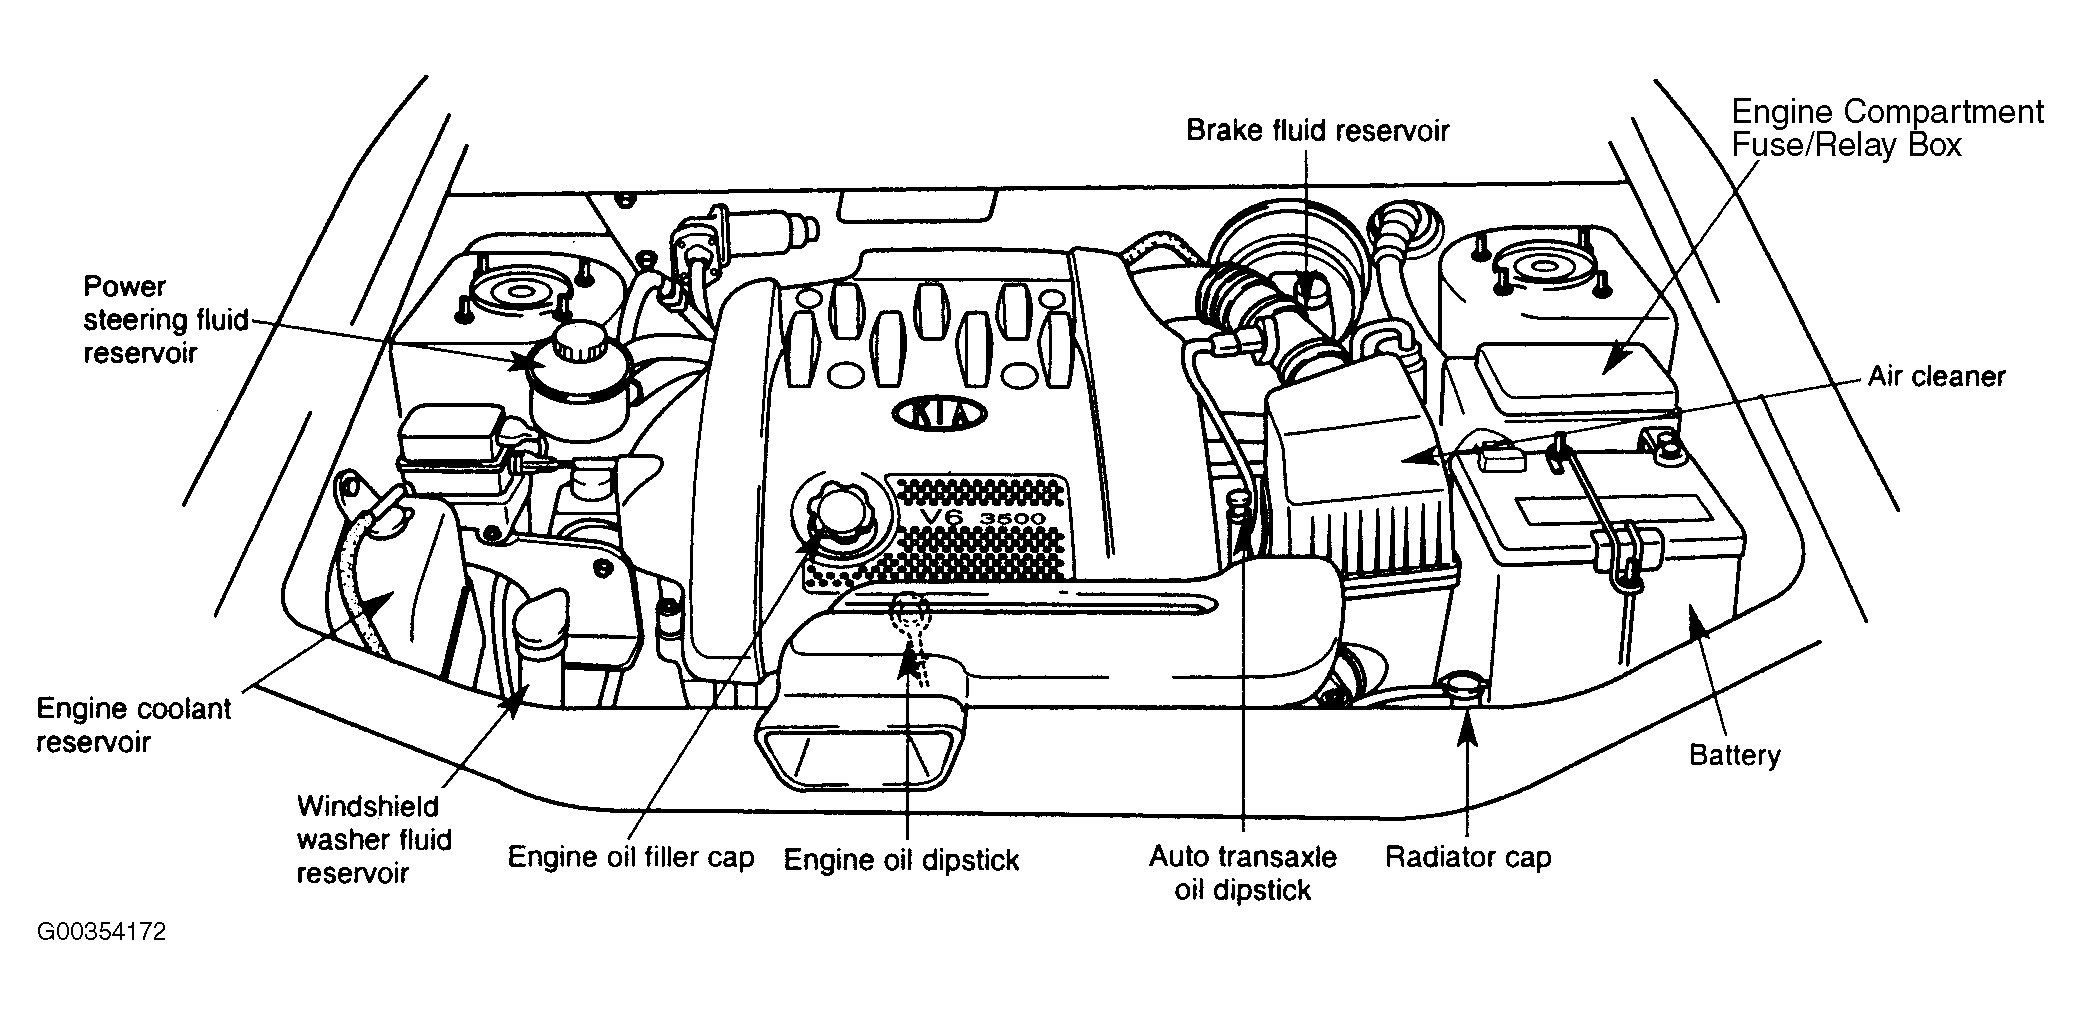 2006 Kia Spectra Parts Diagram | Reviewmotors.co